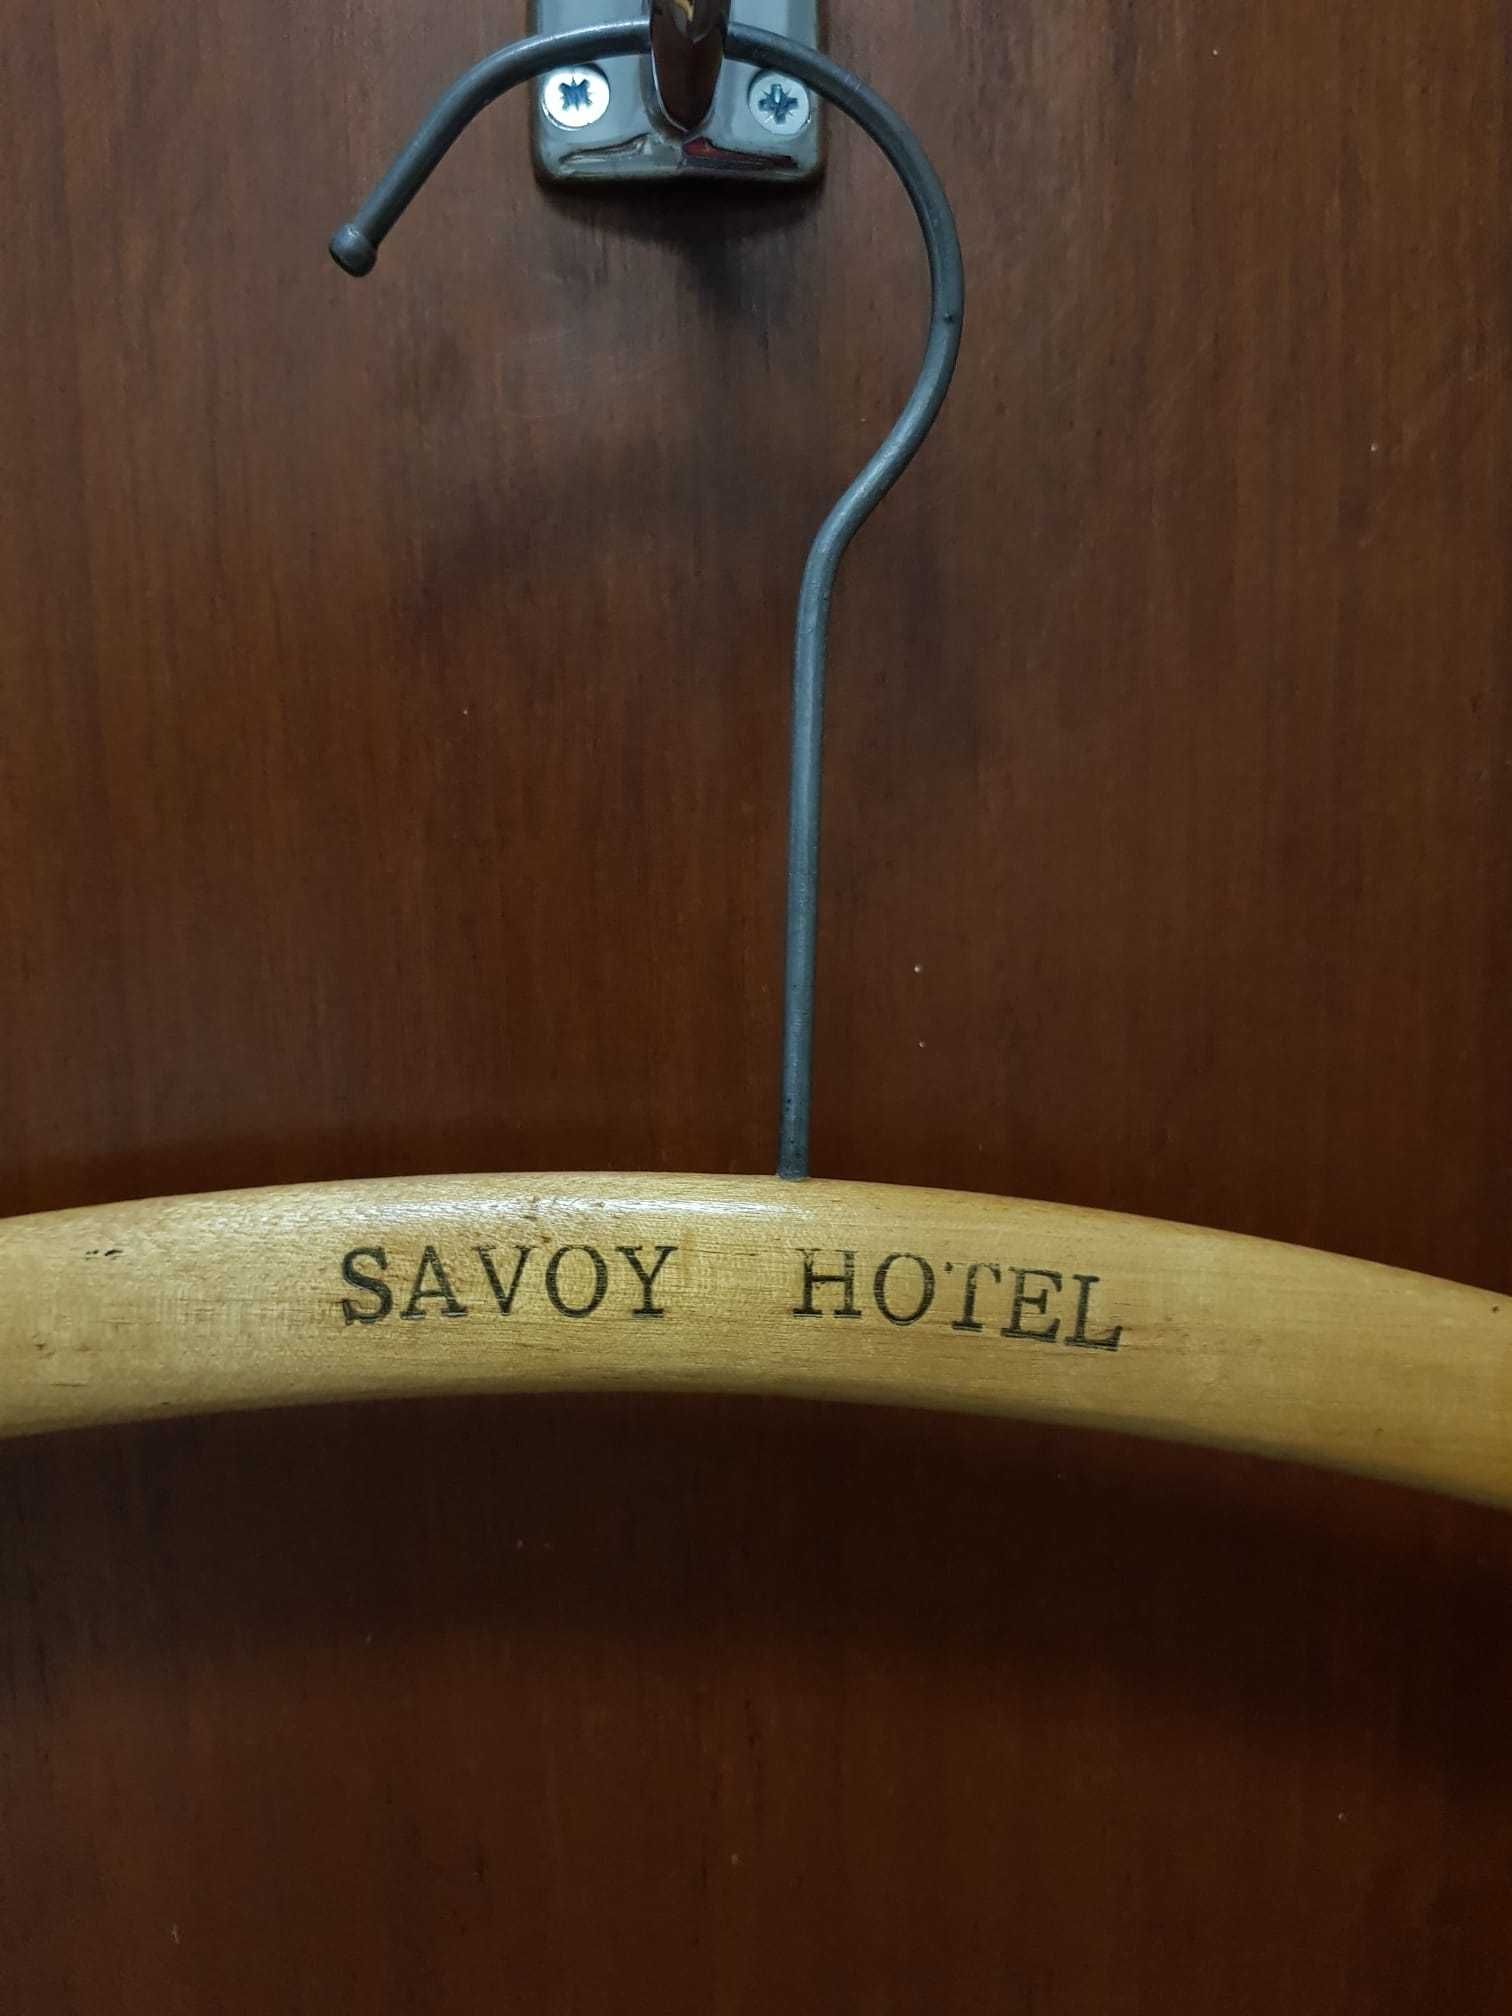 Cabide cruzeta histórico Hotel Savoy Londres